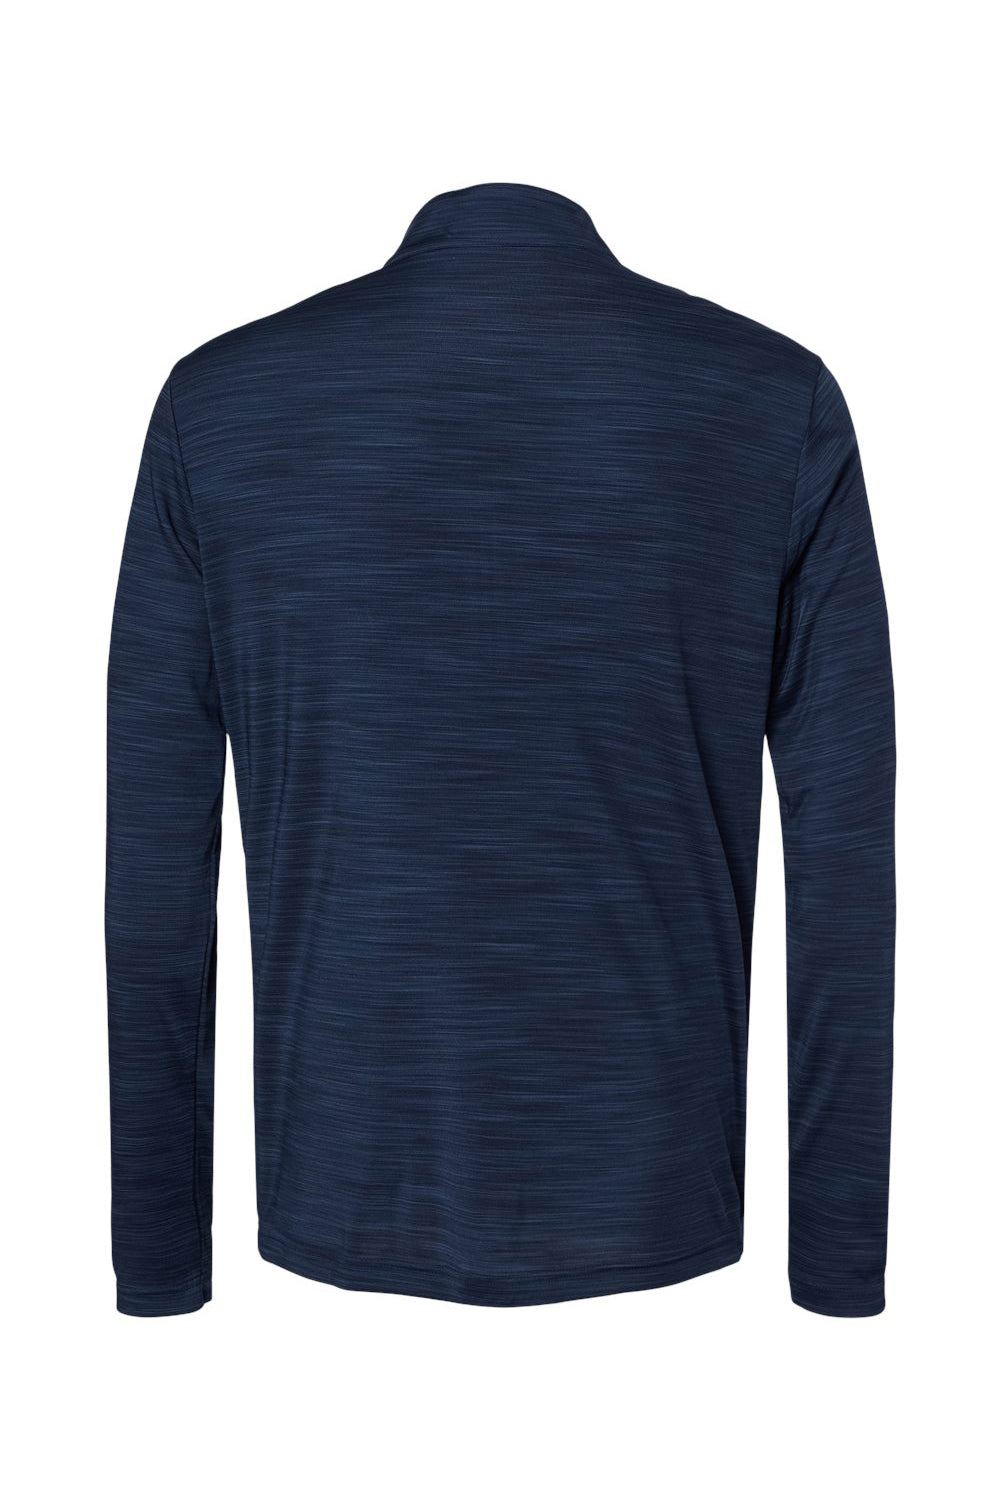 Adidas A475 Mens Moisture Wicking 1/4 Zip Sweatshirt Collegiate Navy Blue Melange Flat Back